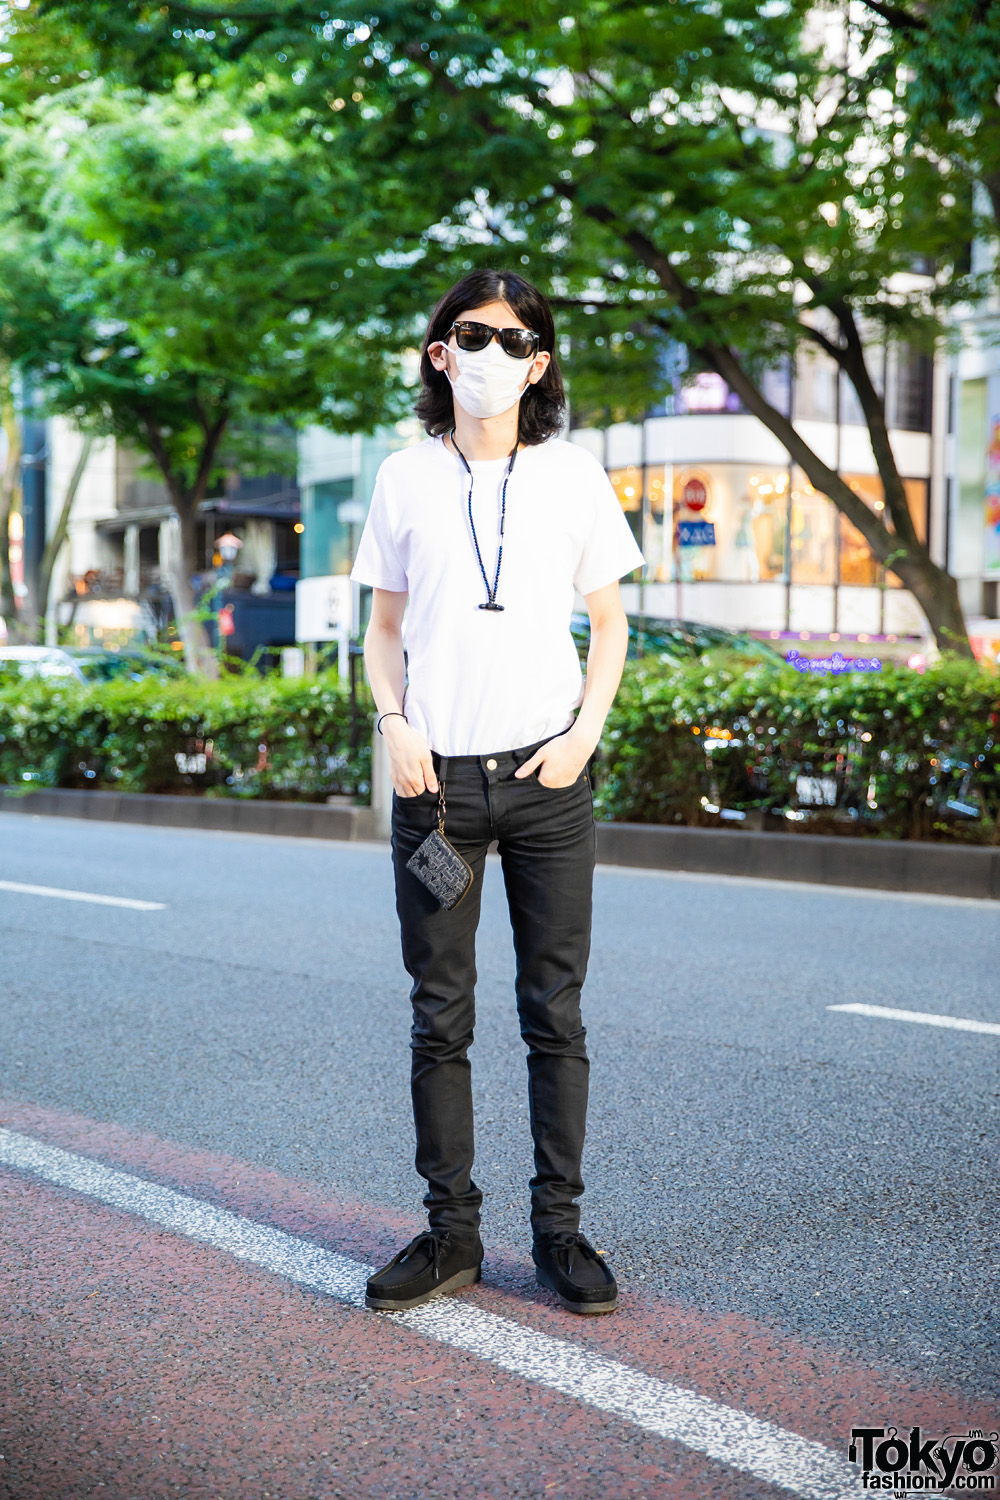 Monochrome Street Style in Tokyo w/ Uniqlo Sunglasses, Hanes Plain White Tee, Christopher Nemeth Coin Purse, Saint Laurent Skinny Jeans & Clarks Wallabee Boots